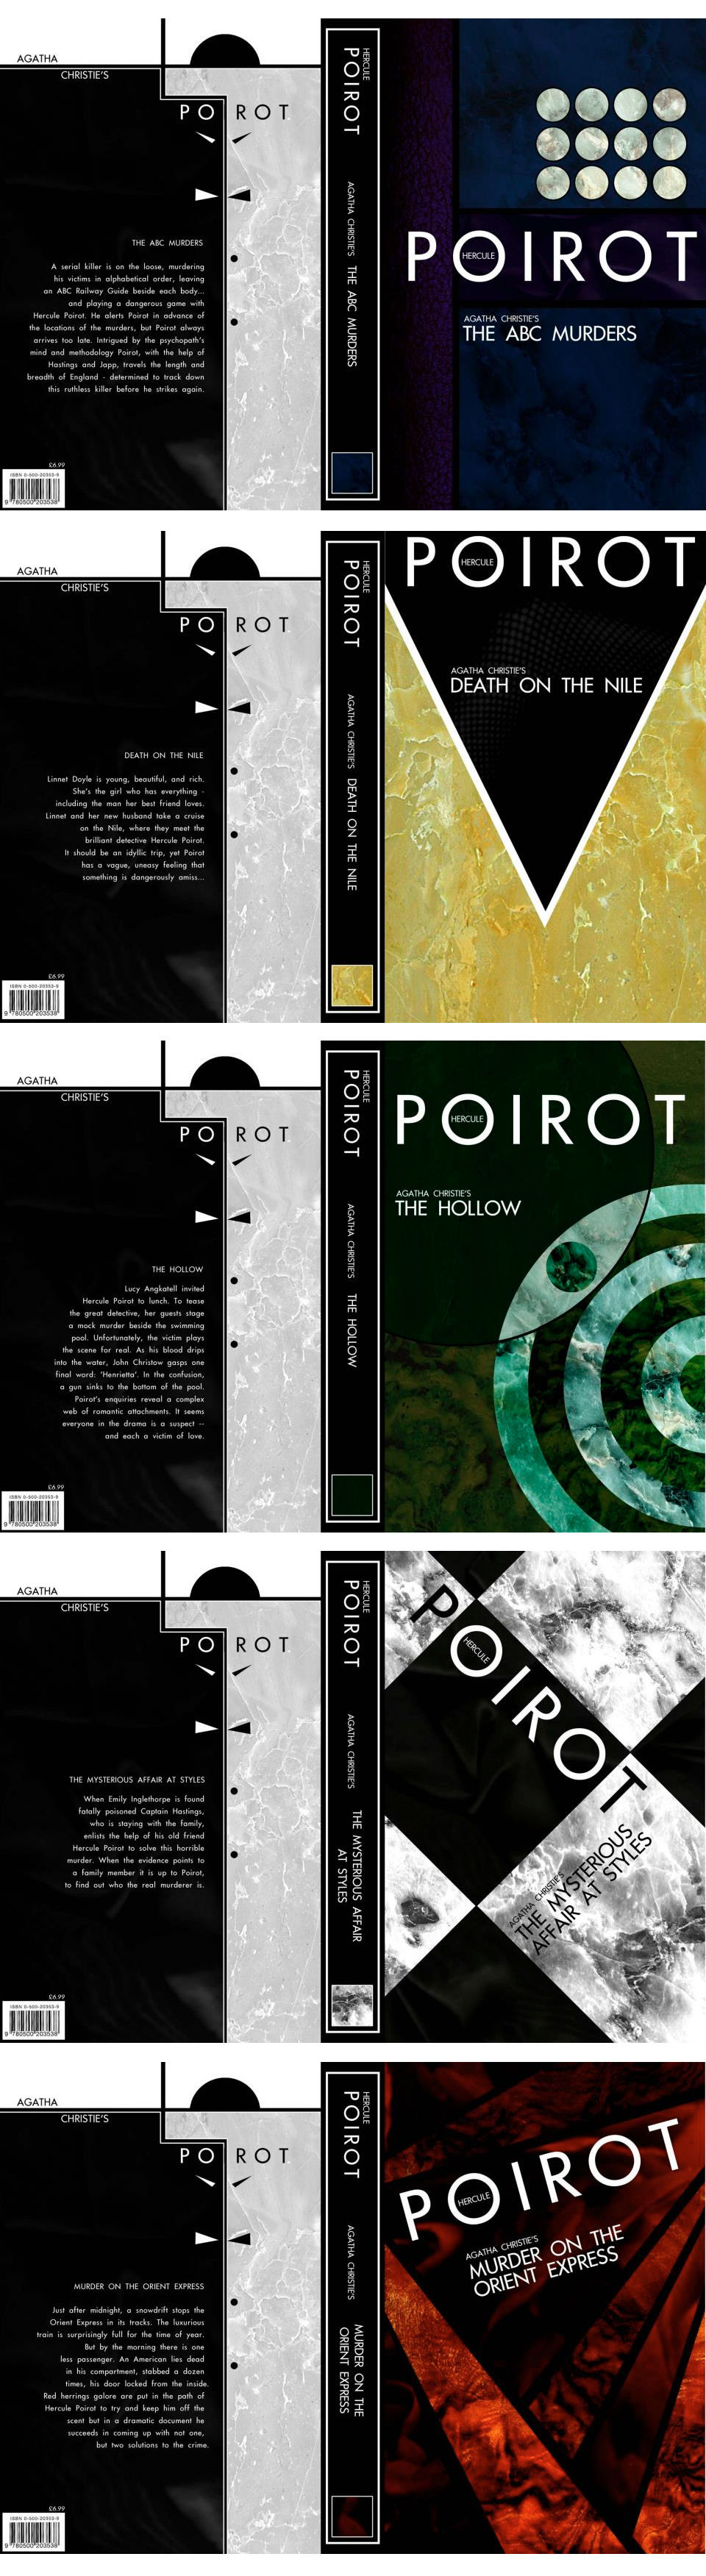 hercule poirot agatha christie Book Cover Design